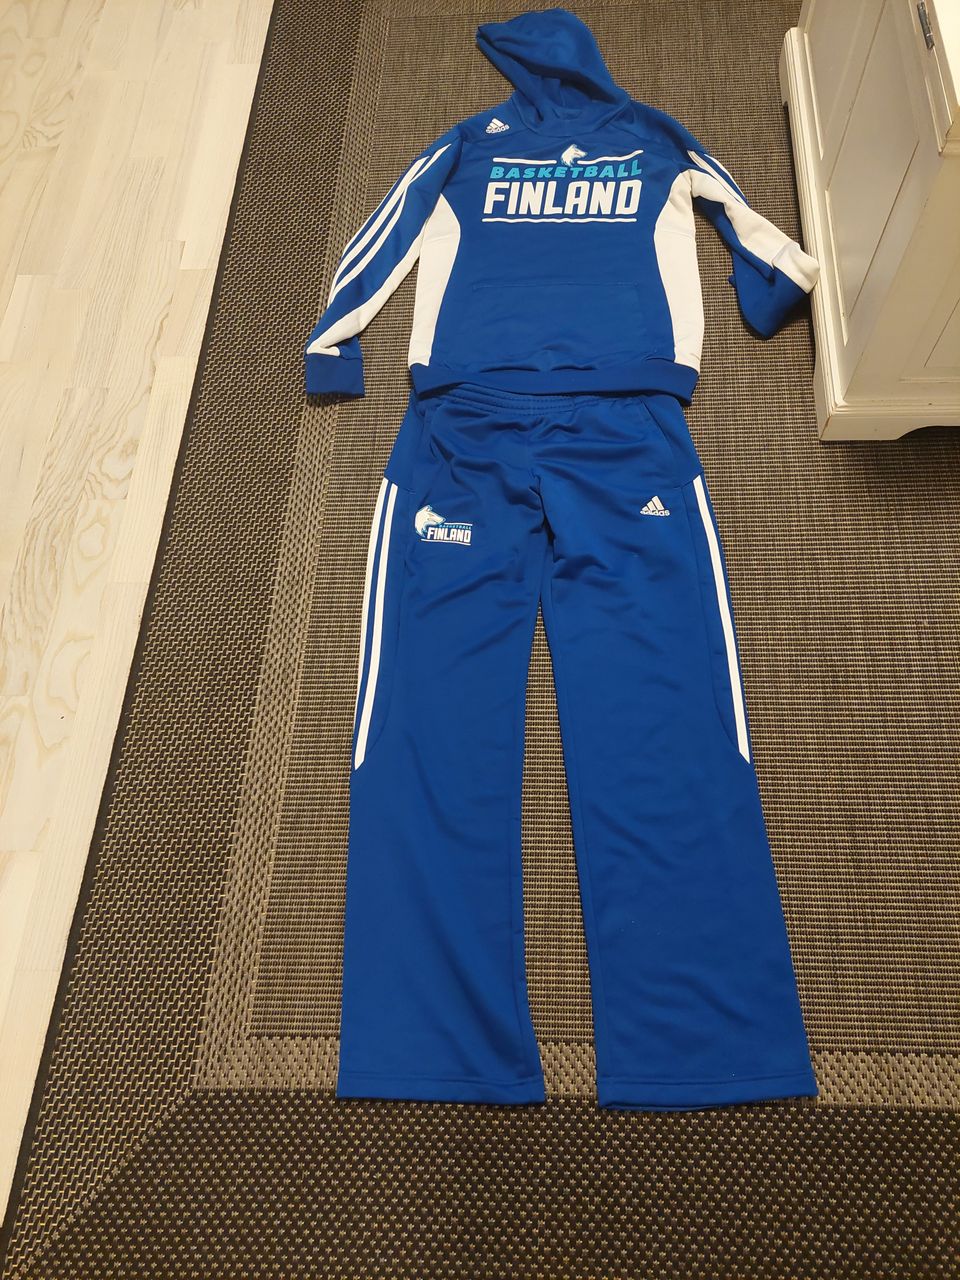 Basketball Finland collegeasu s